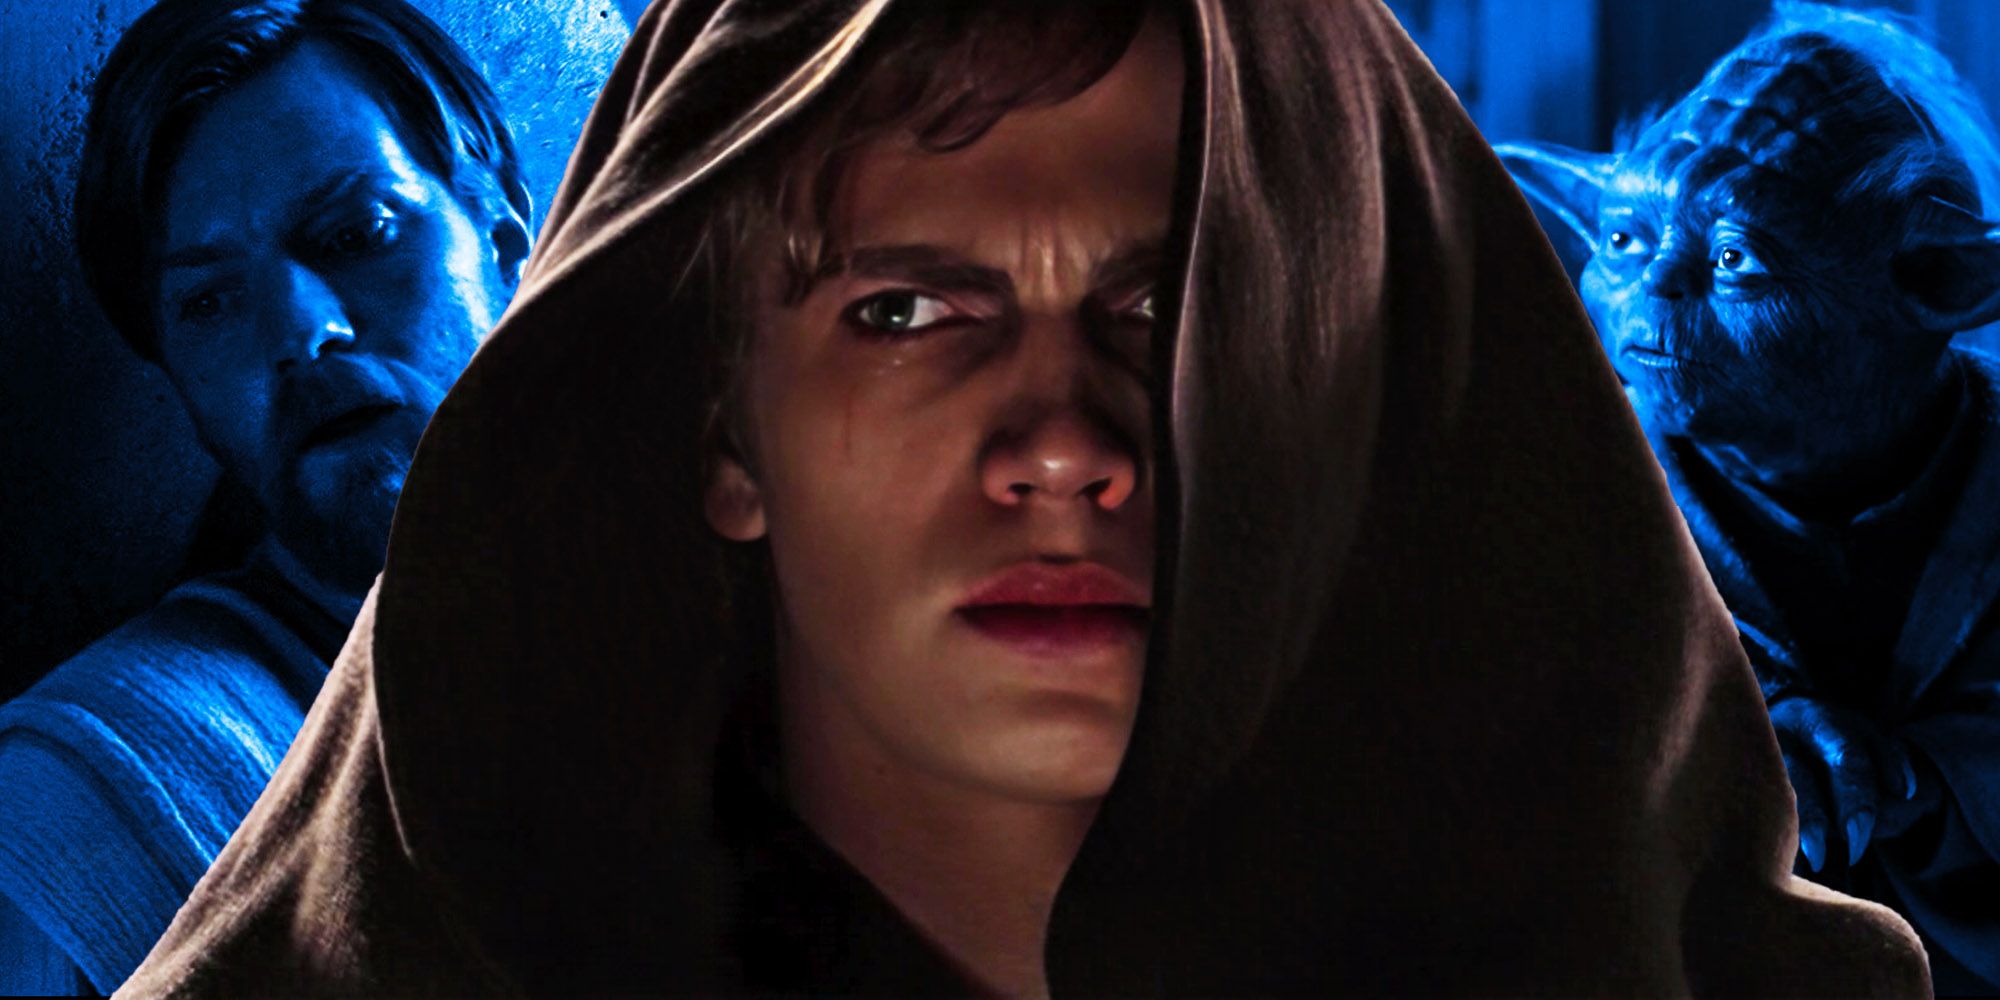 Anakin Skywalker from order 66, with Obi-Wan and Yoda